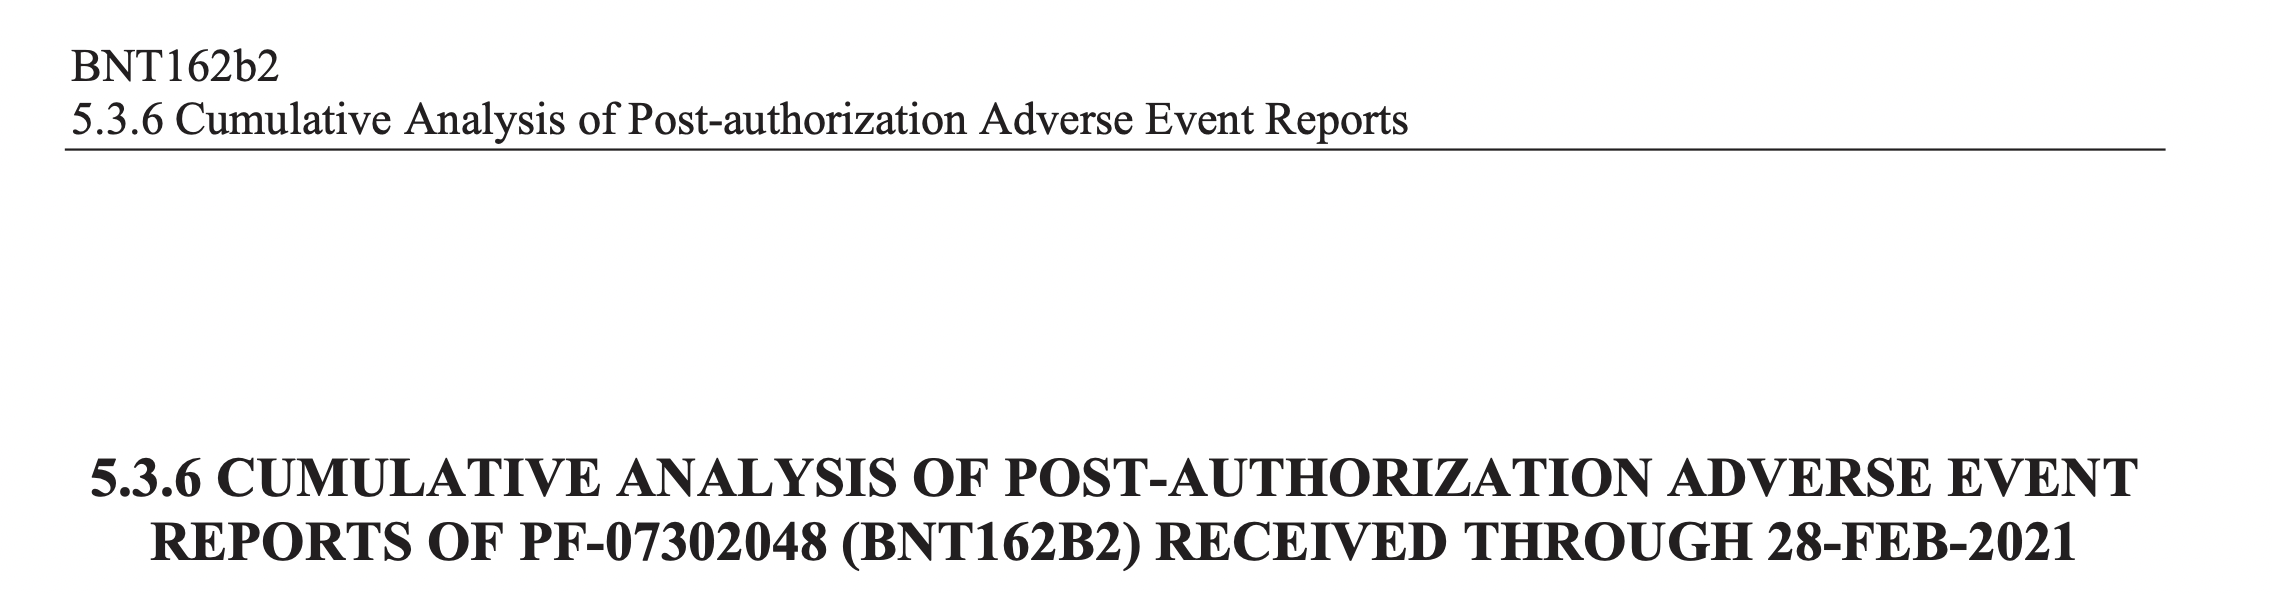 Bombshell Document Dump on Pfizer Vaccine Data  Screen-Shot-2021-12-05-at-17.53.16